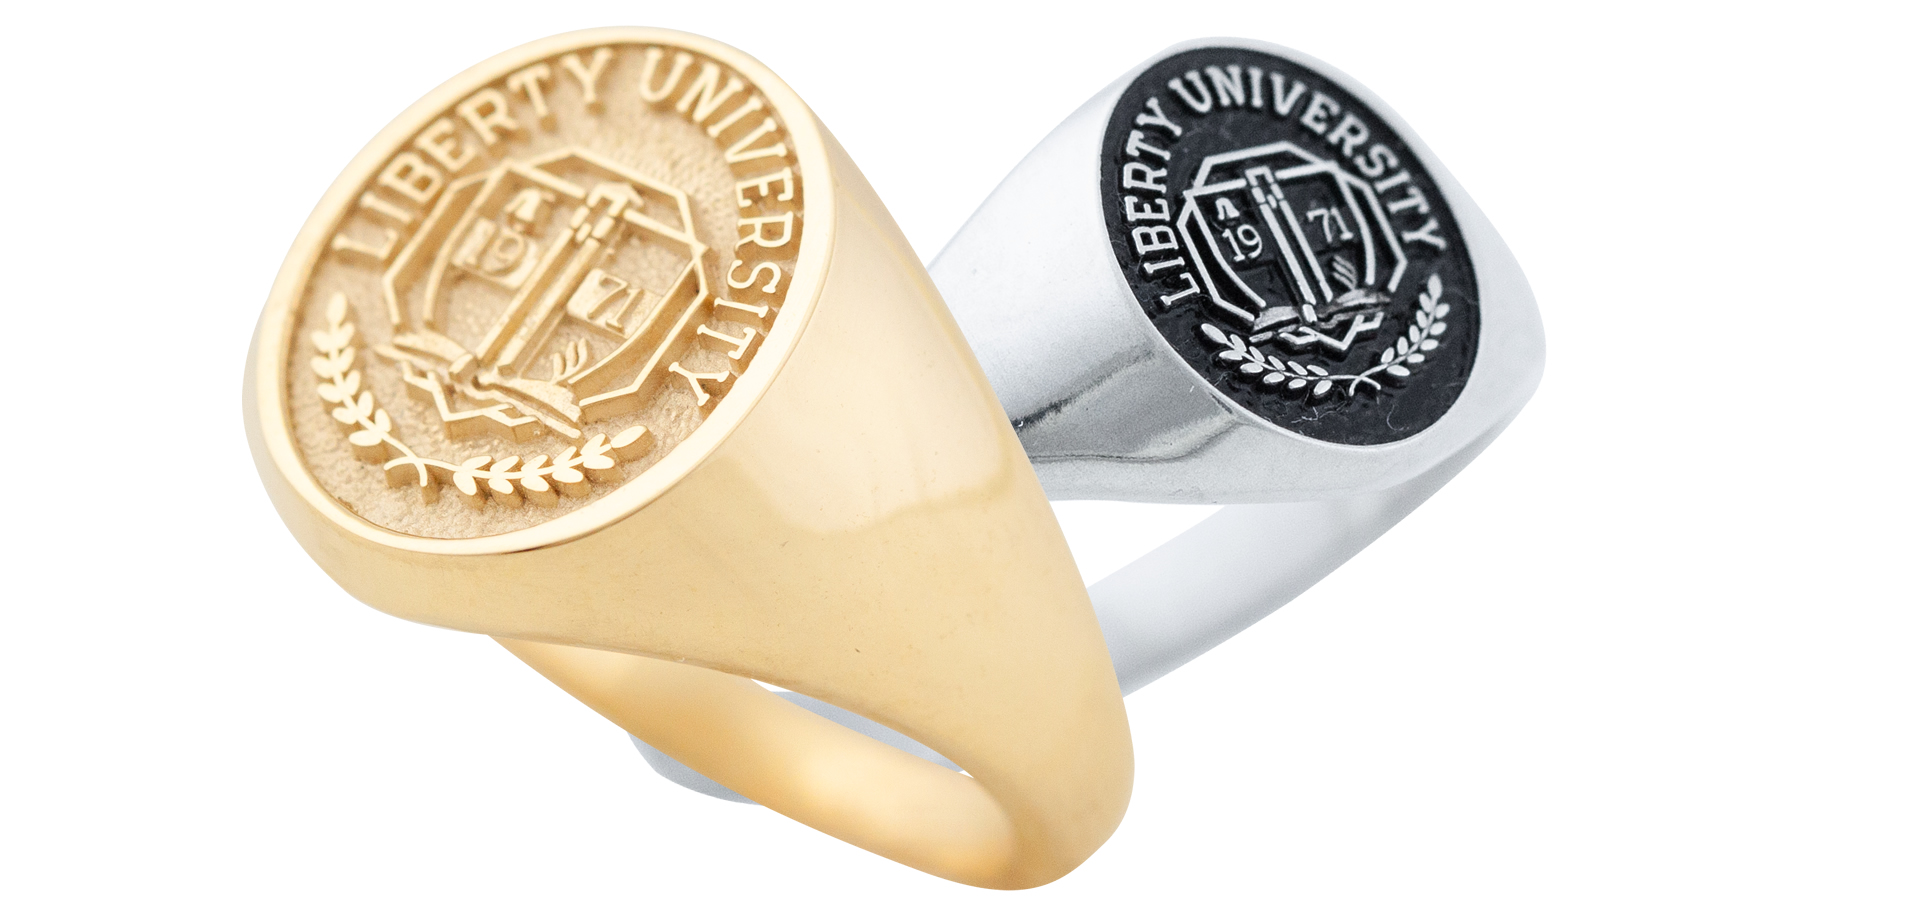 image of example Liberty University rings